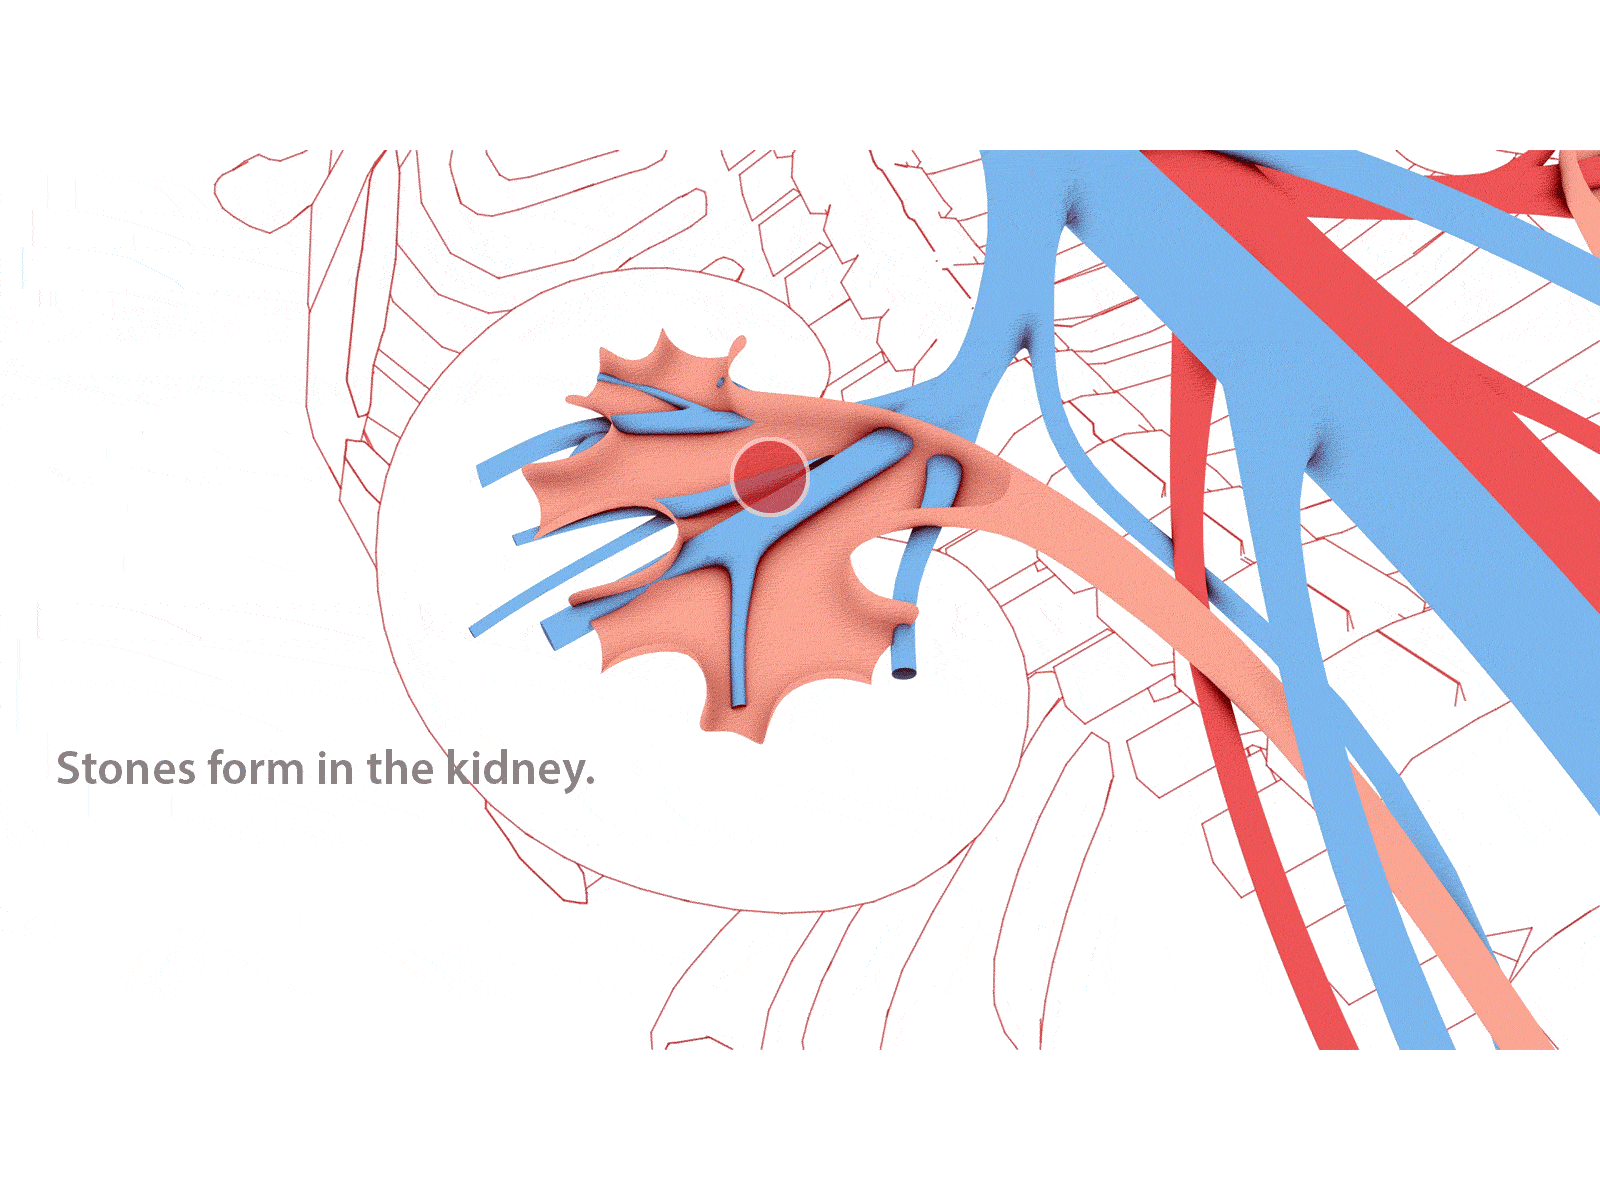 3d animation of kidney stones by JM Gallardo on Dribbble